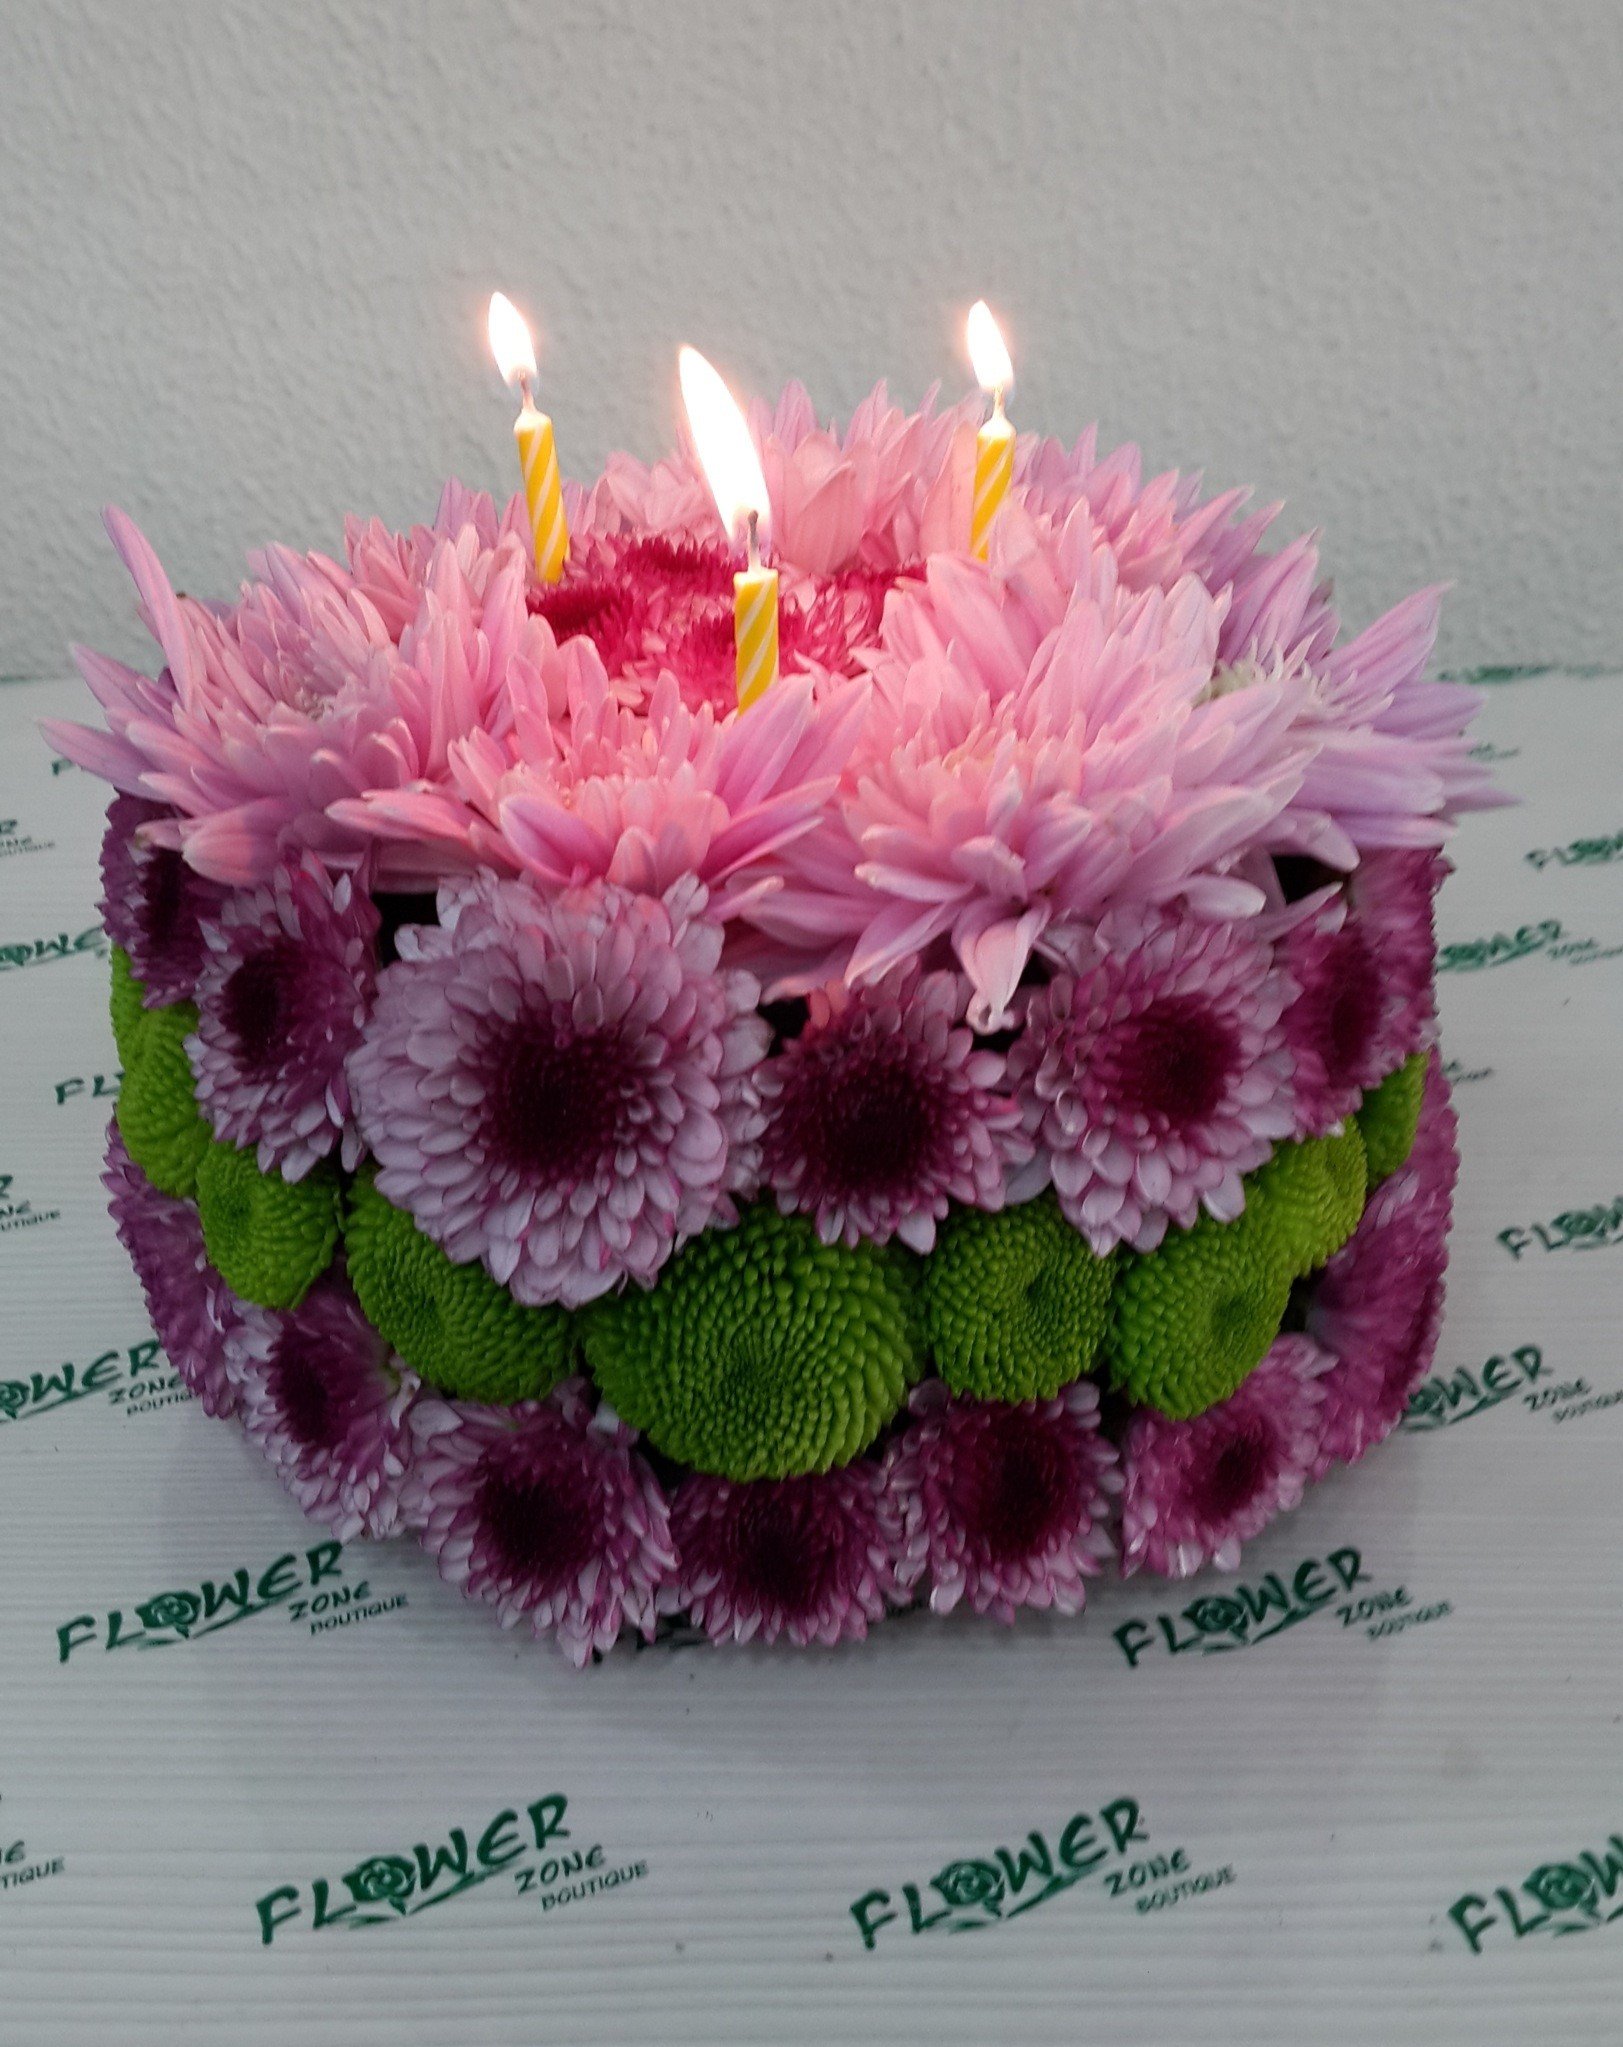 Order flowers cakes online